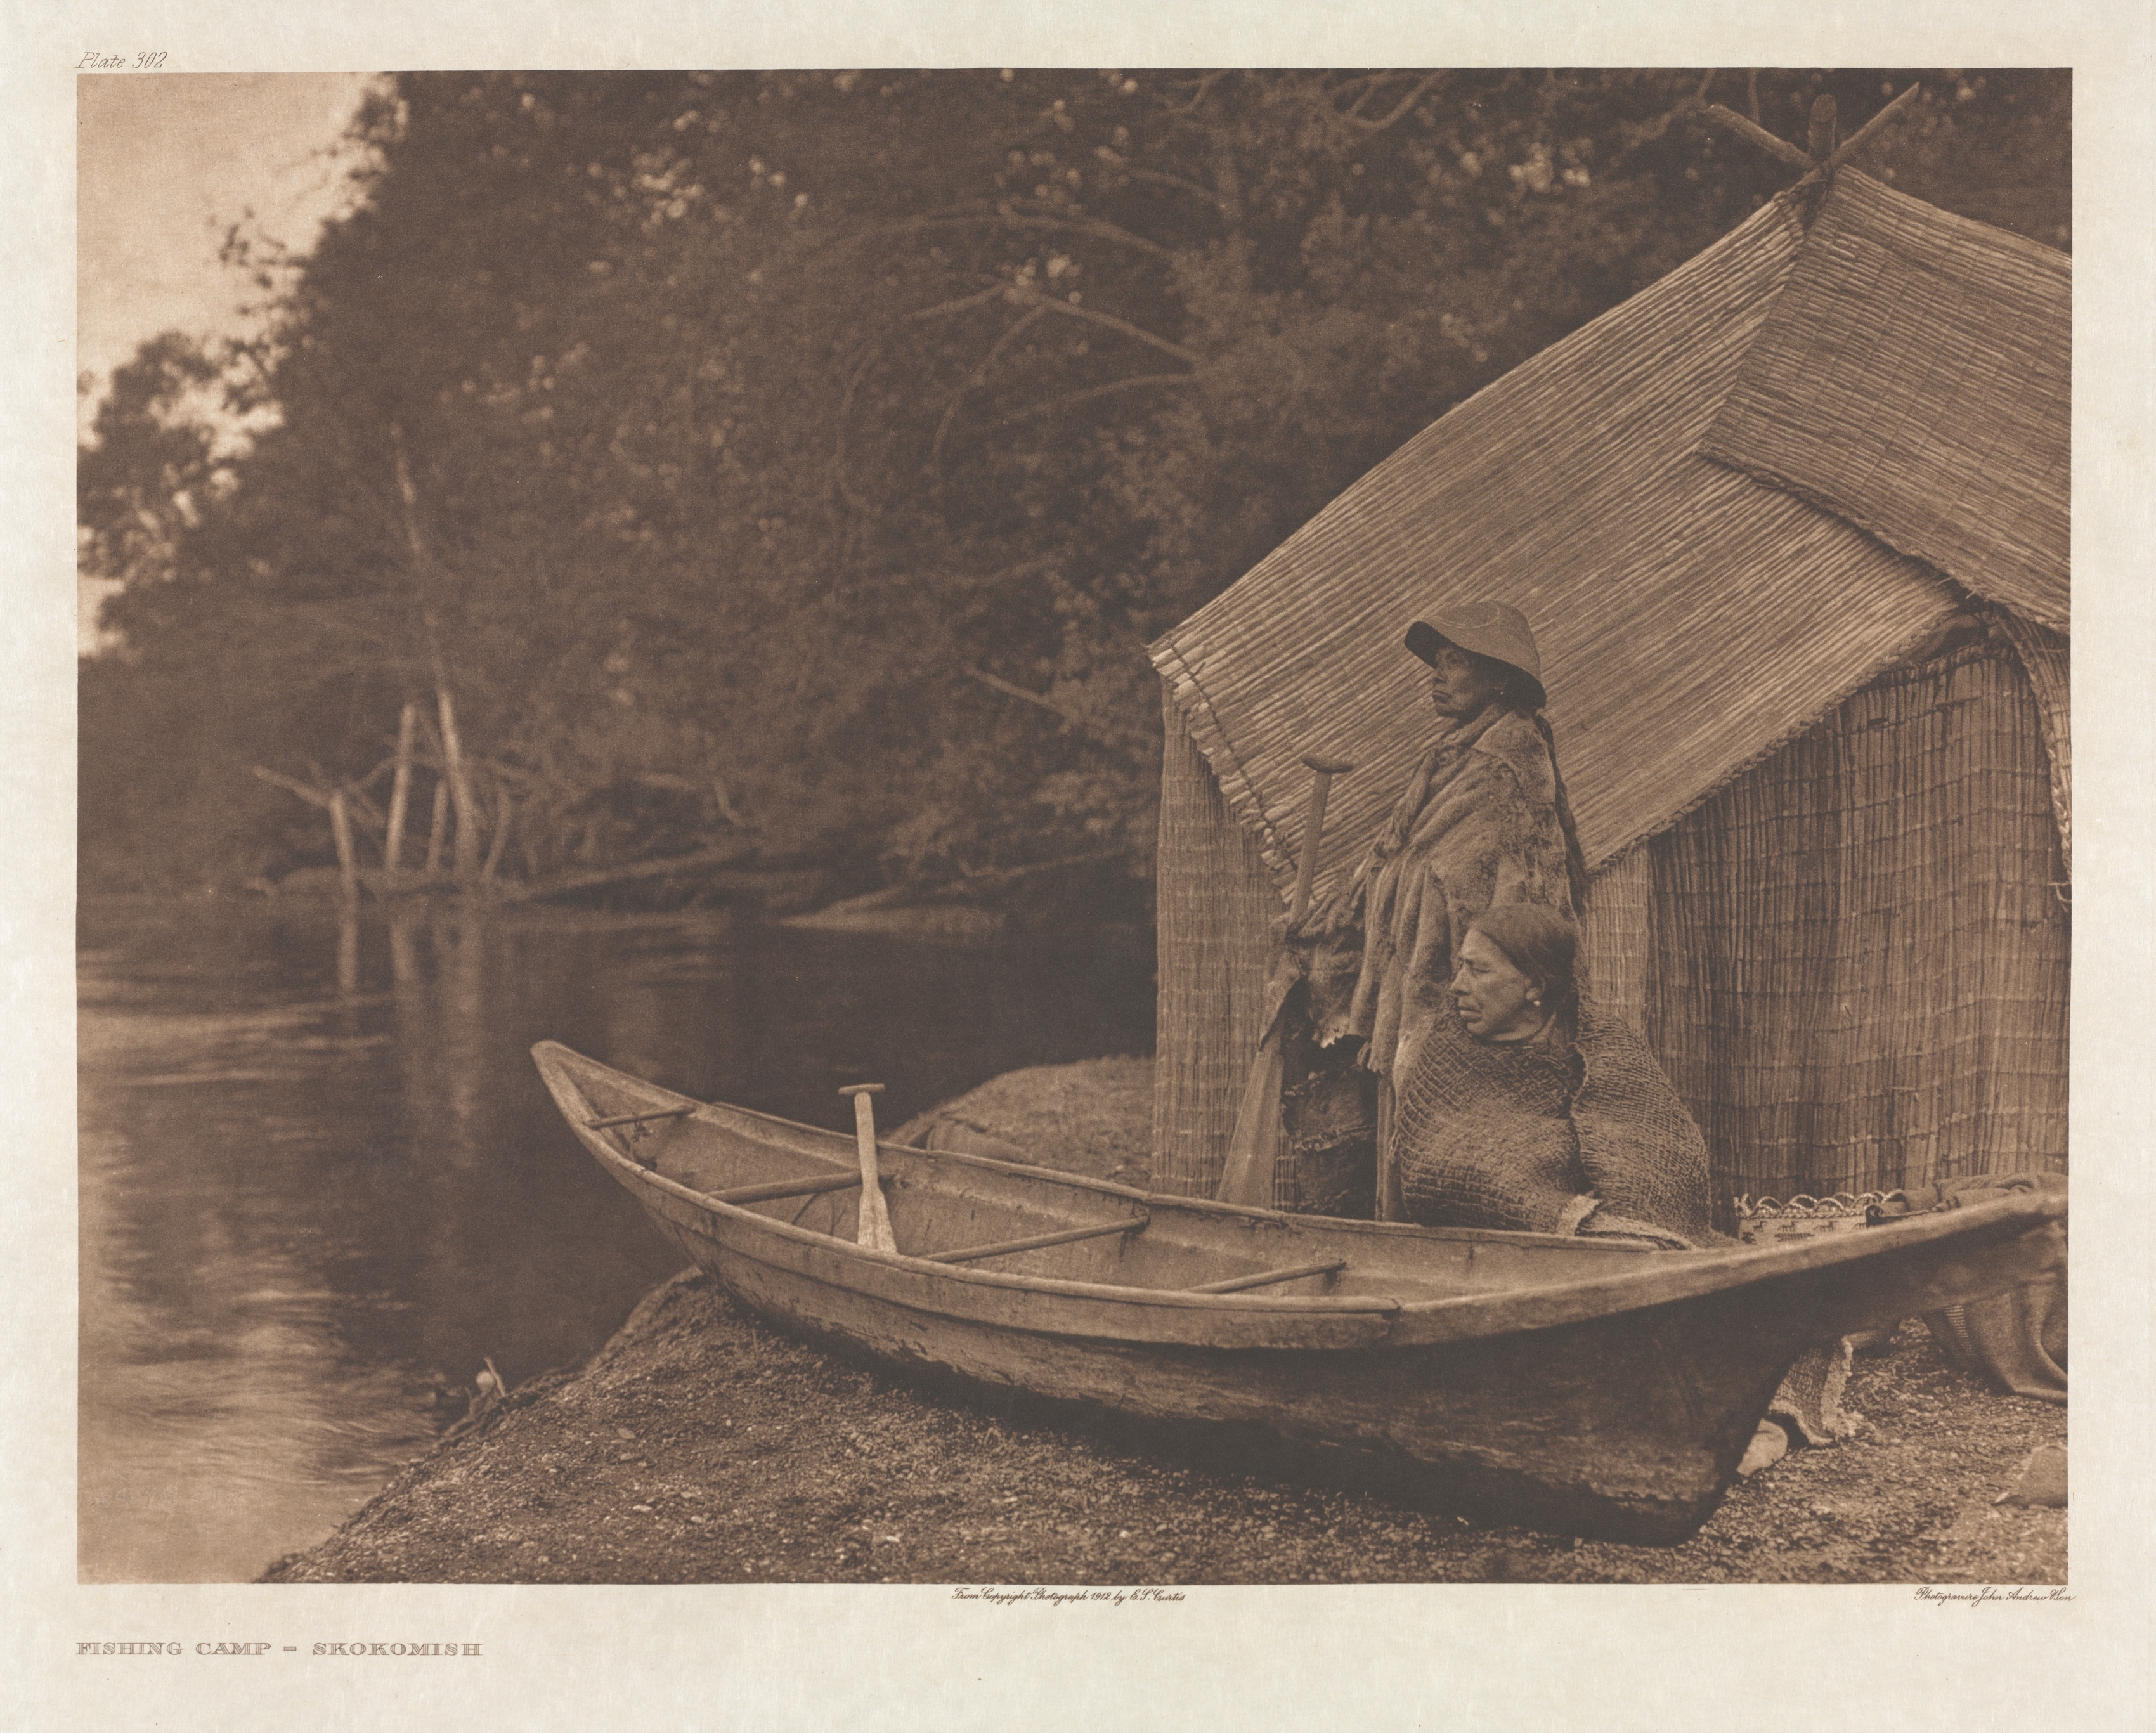 Portfolio IX, Plate 302: Fishing Camp - Skokomish